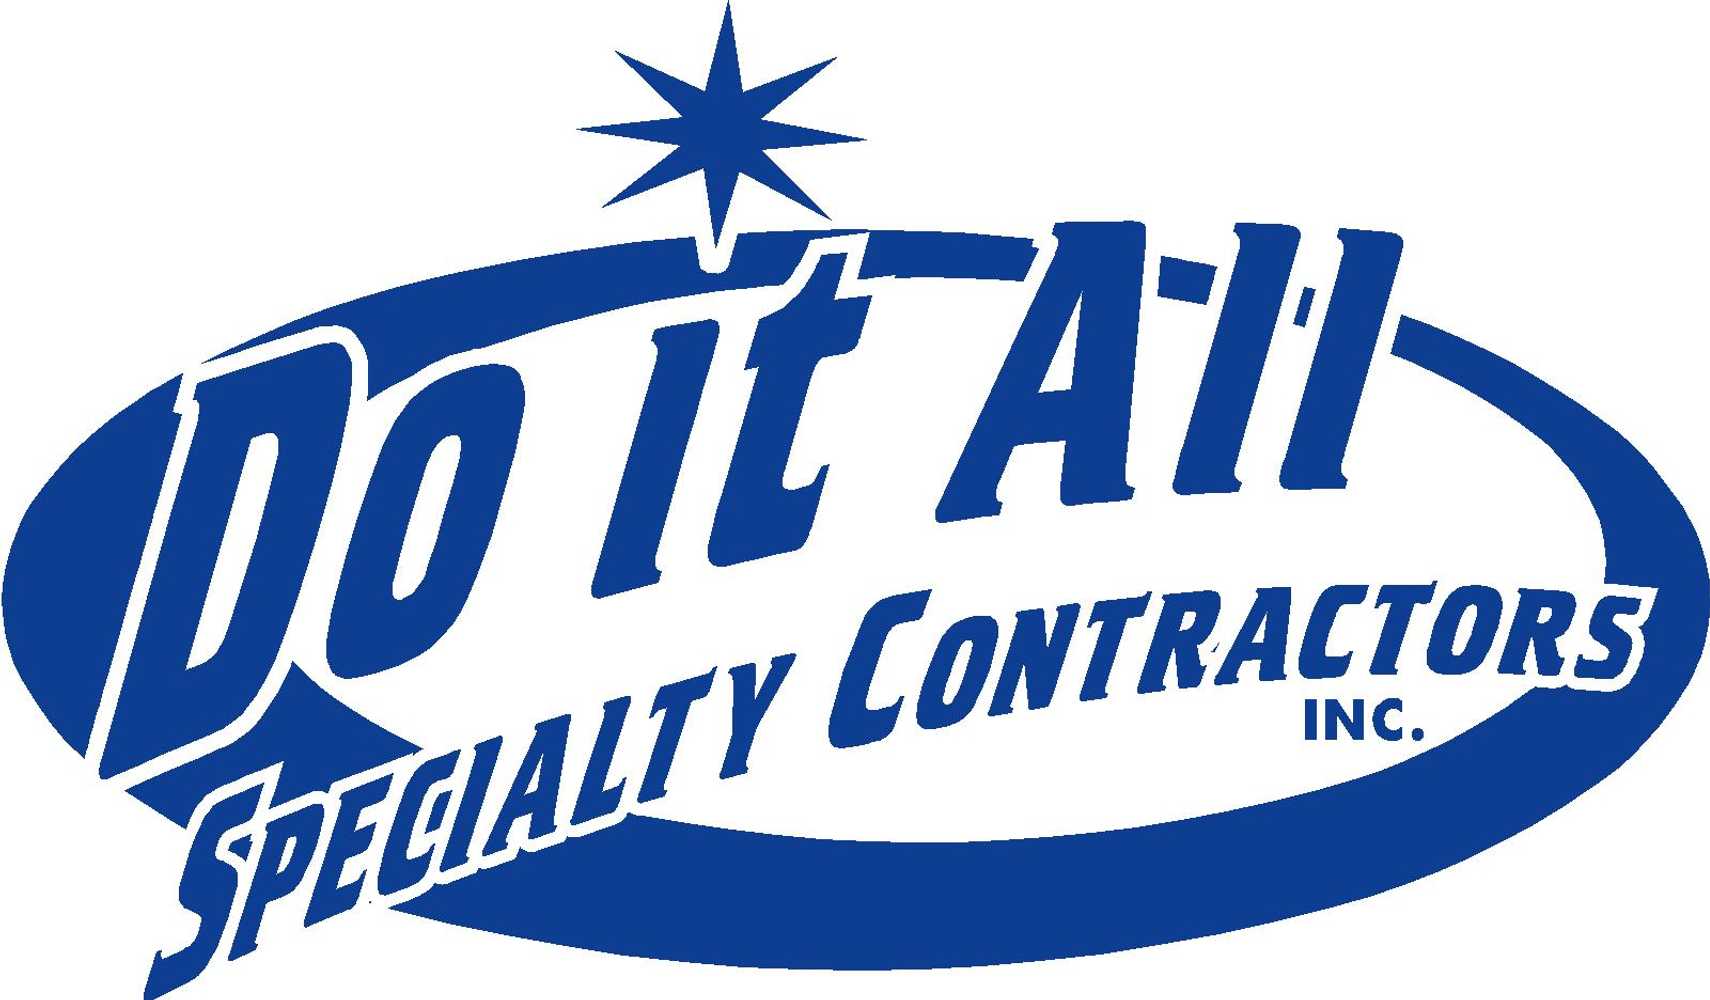 Do It All Specialty Contractors Inc.